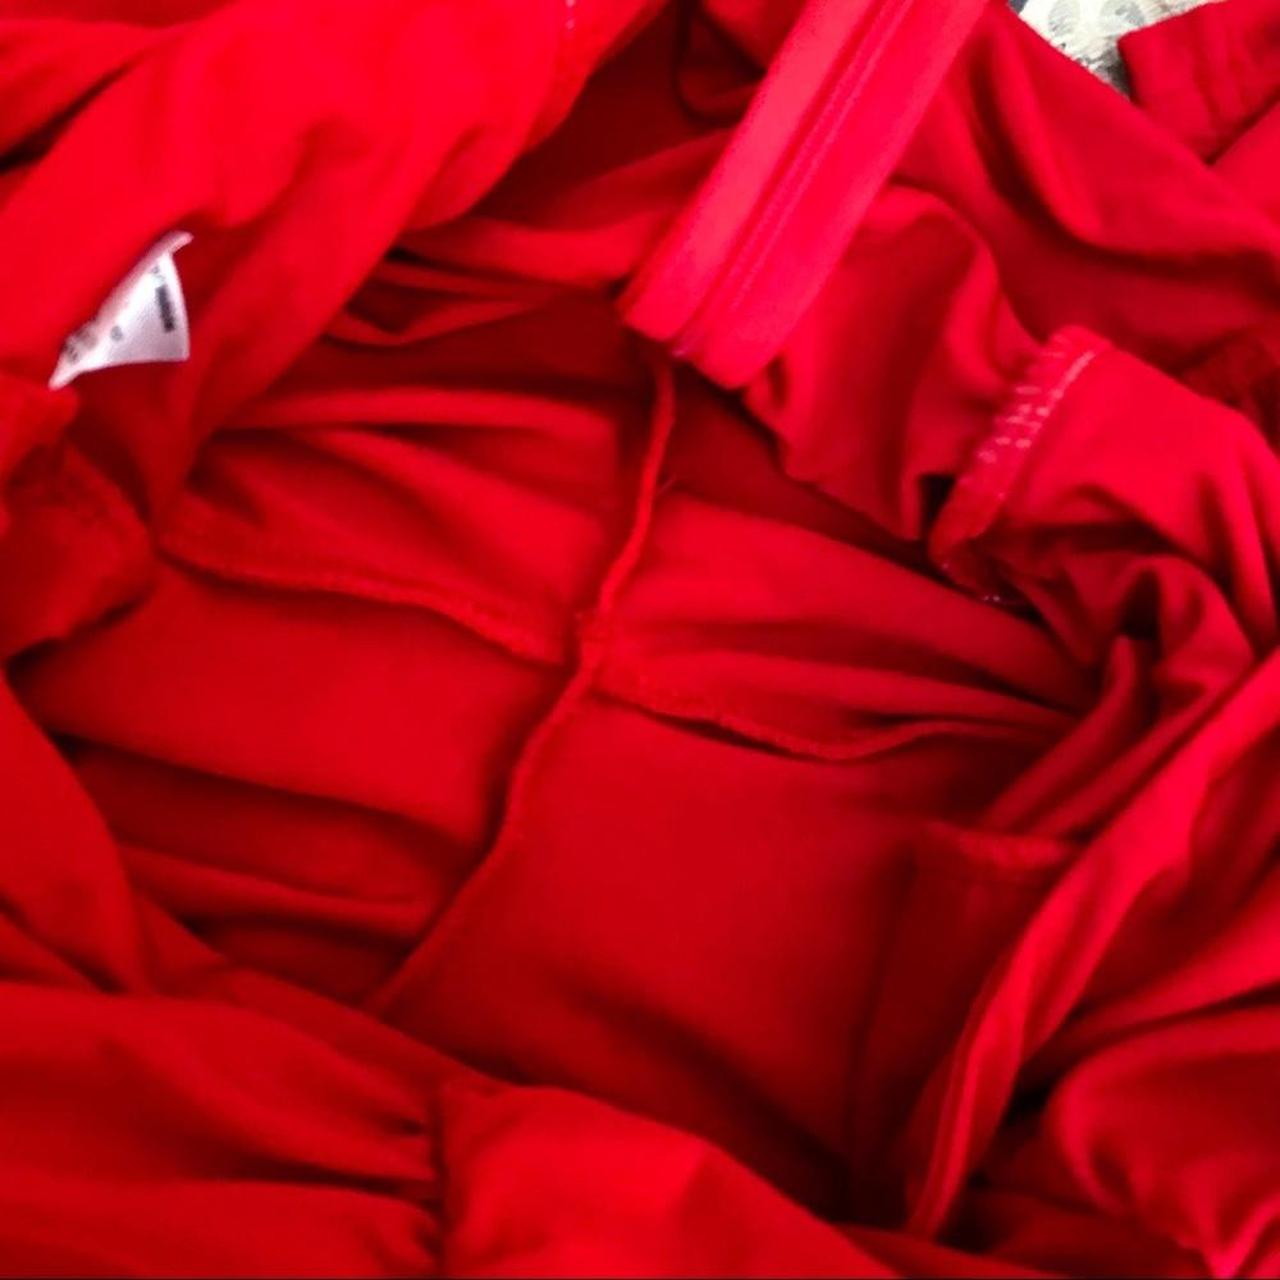 Product Image 3 - IAMGIA Estella Pant
Color Red
Size Medium
Excellent